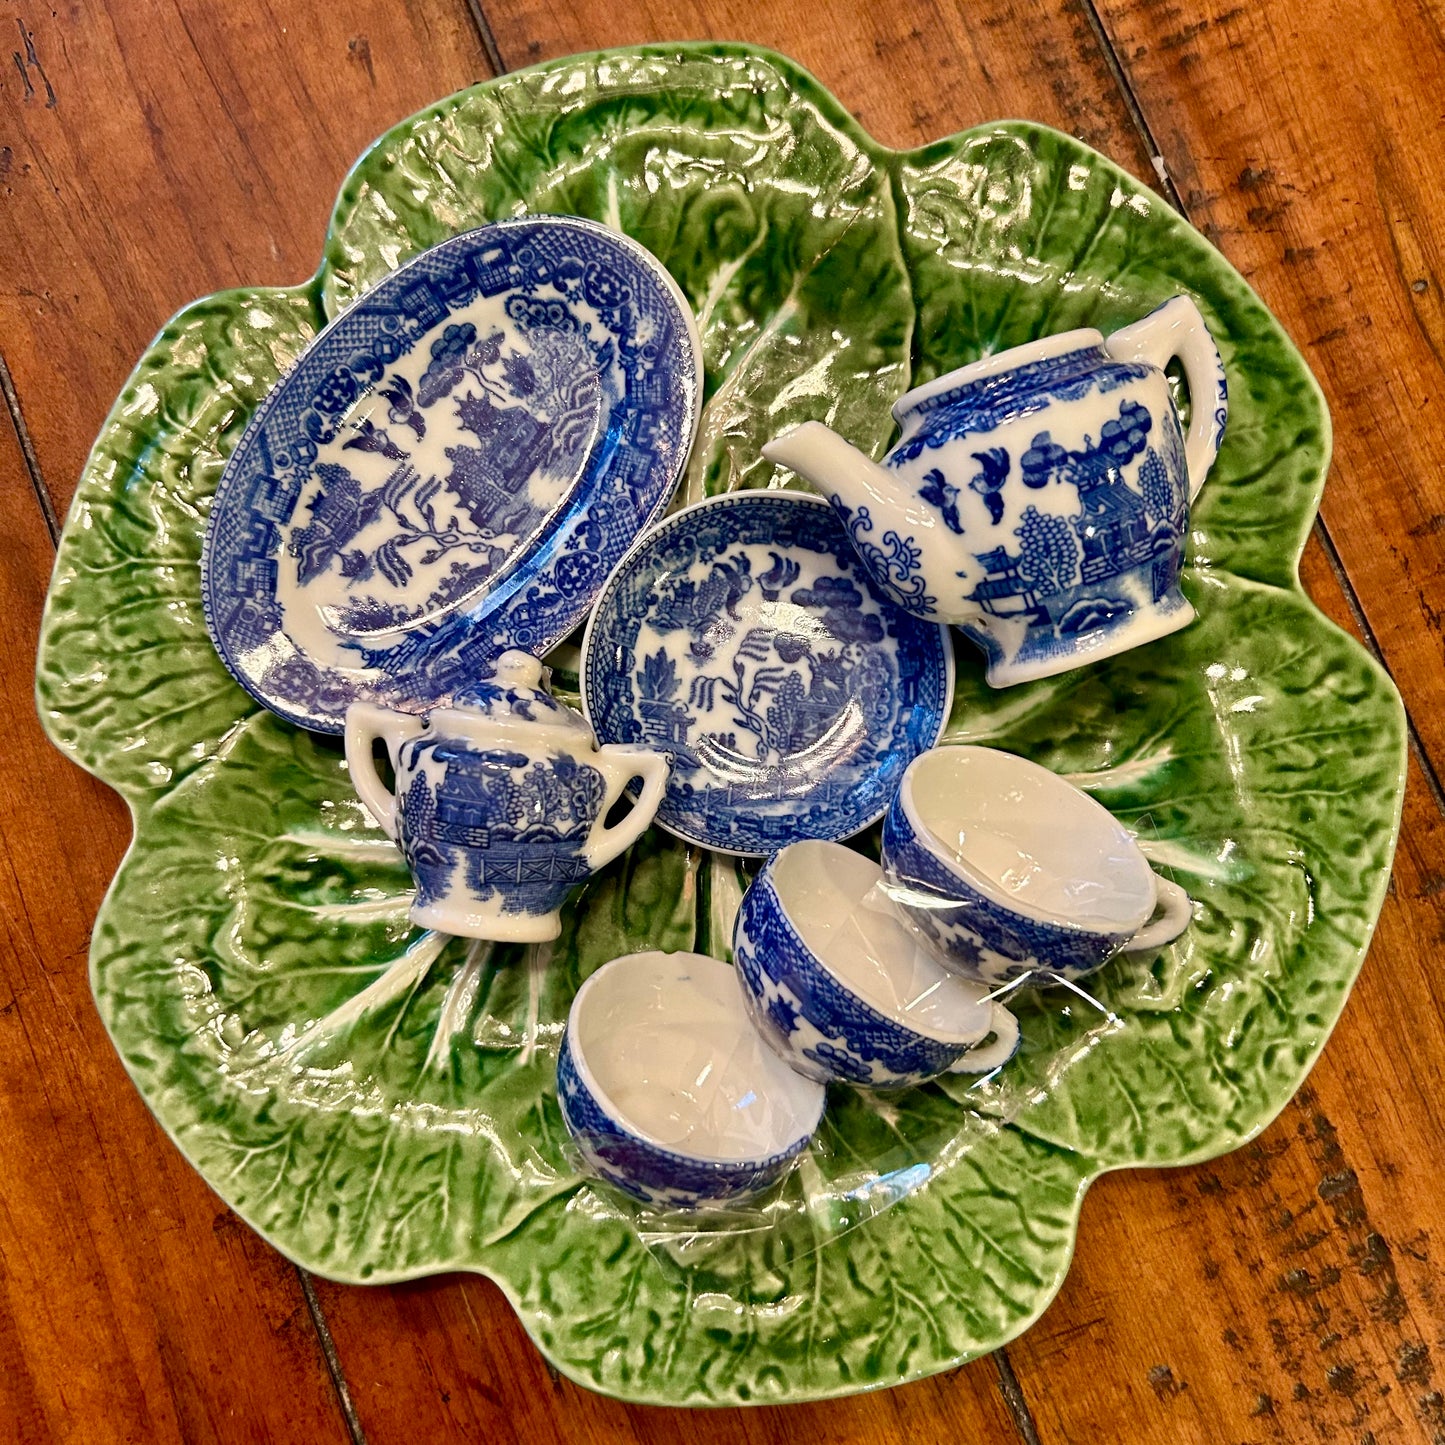 Set of 7 miniature blue and white chinoiserie tea set